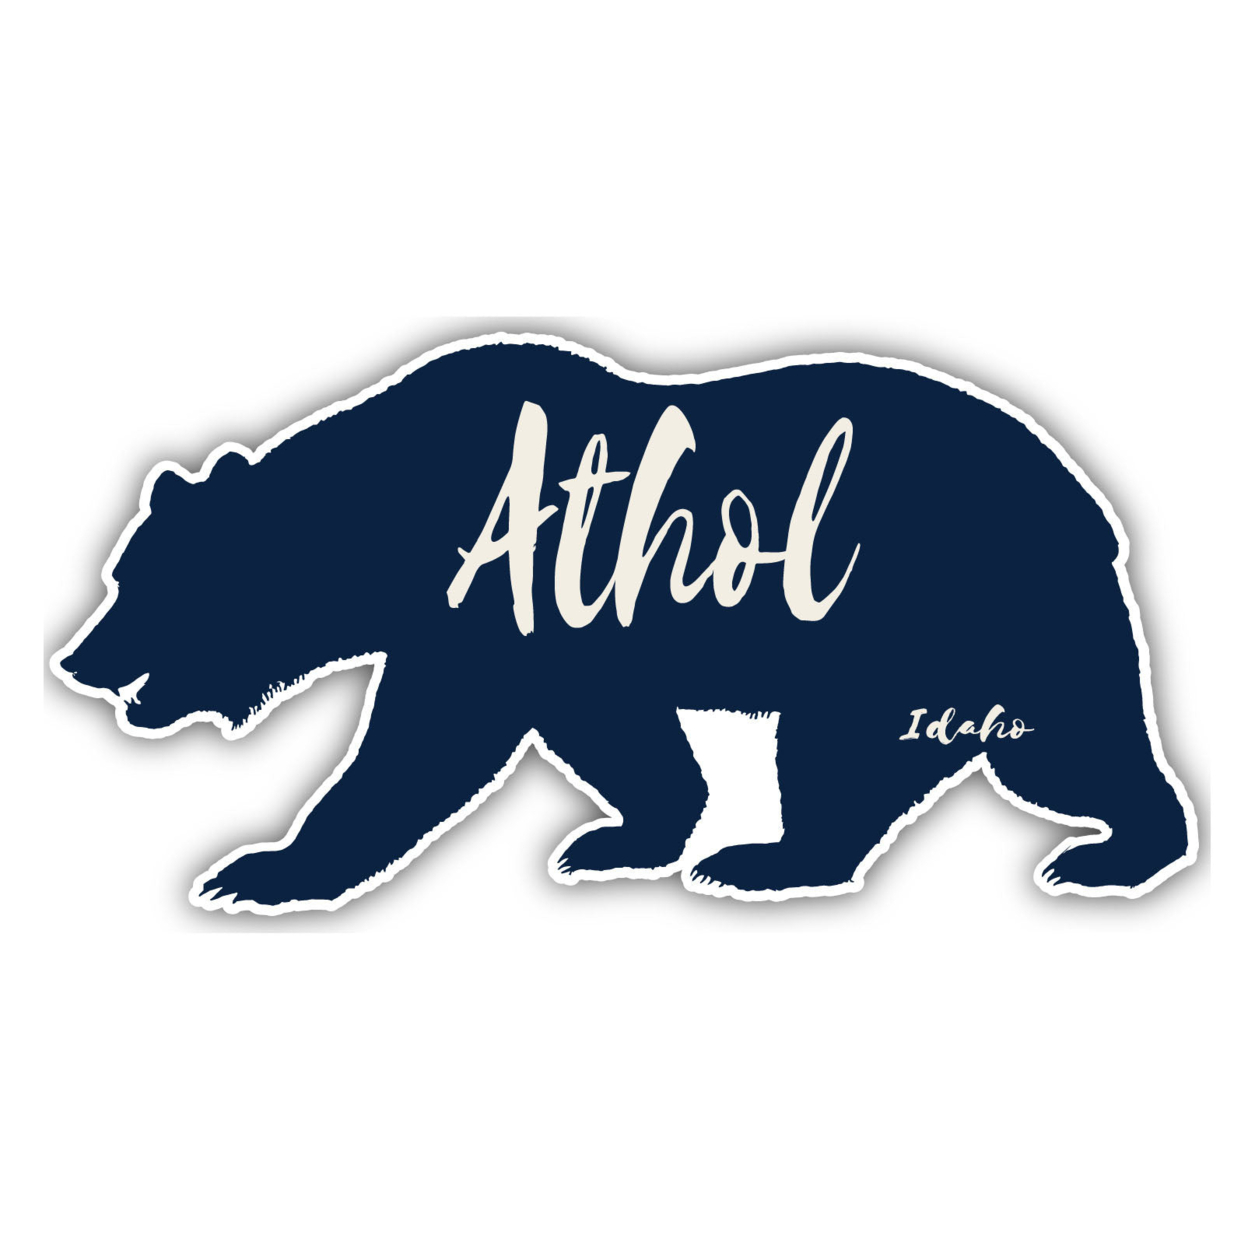 Athol Idaho Souvenir Decorative Stickers (Choose Theme And Size) - 4-Pack, 2-Inch, Bear